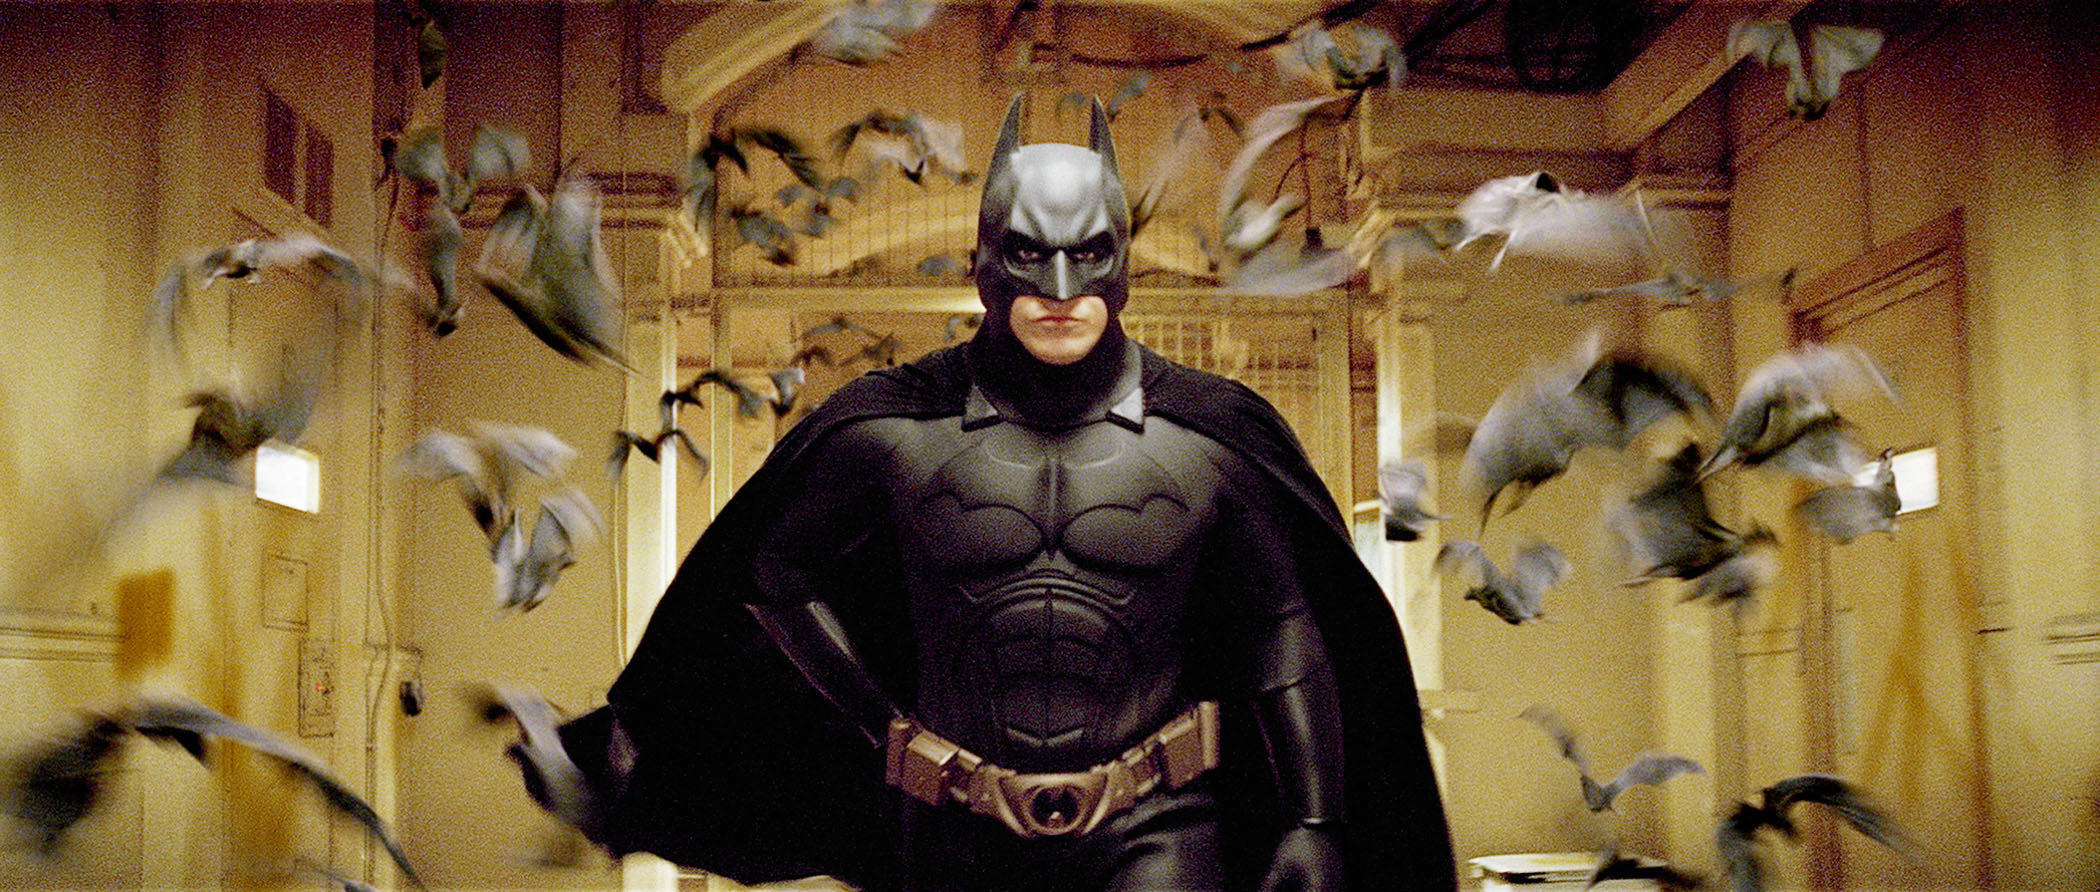 Christian Bale as Batman, surrounded by bats